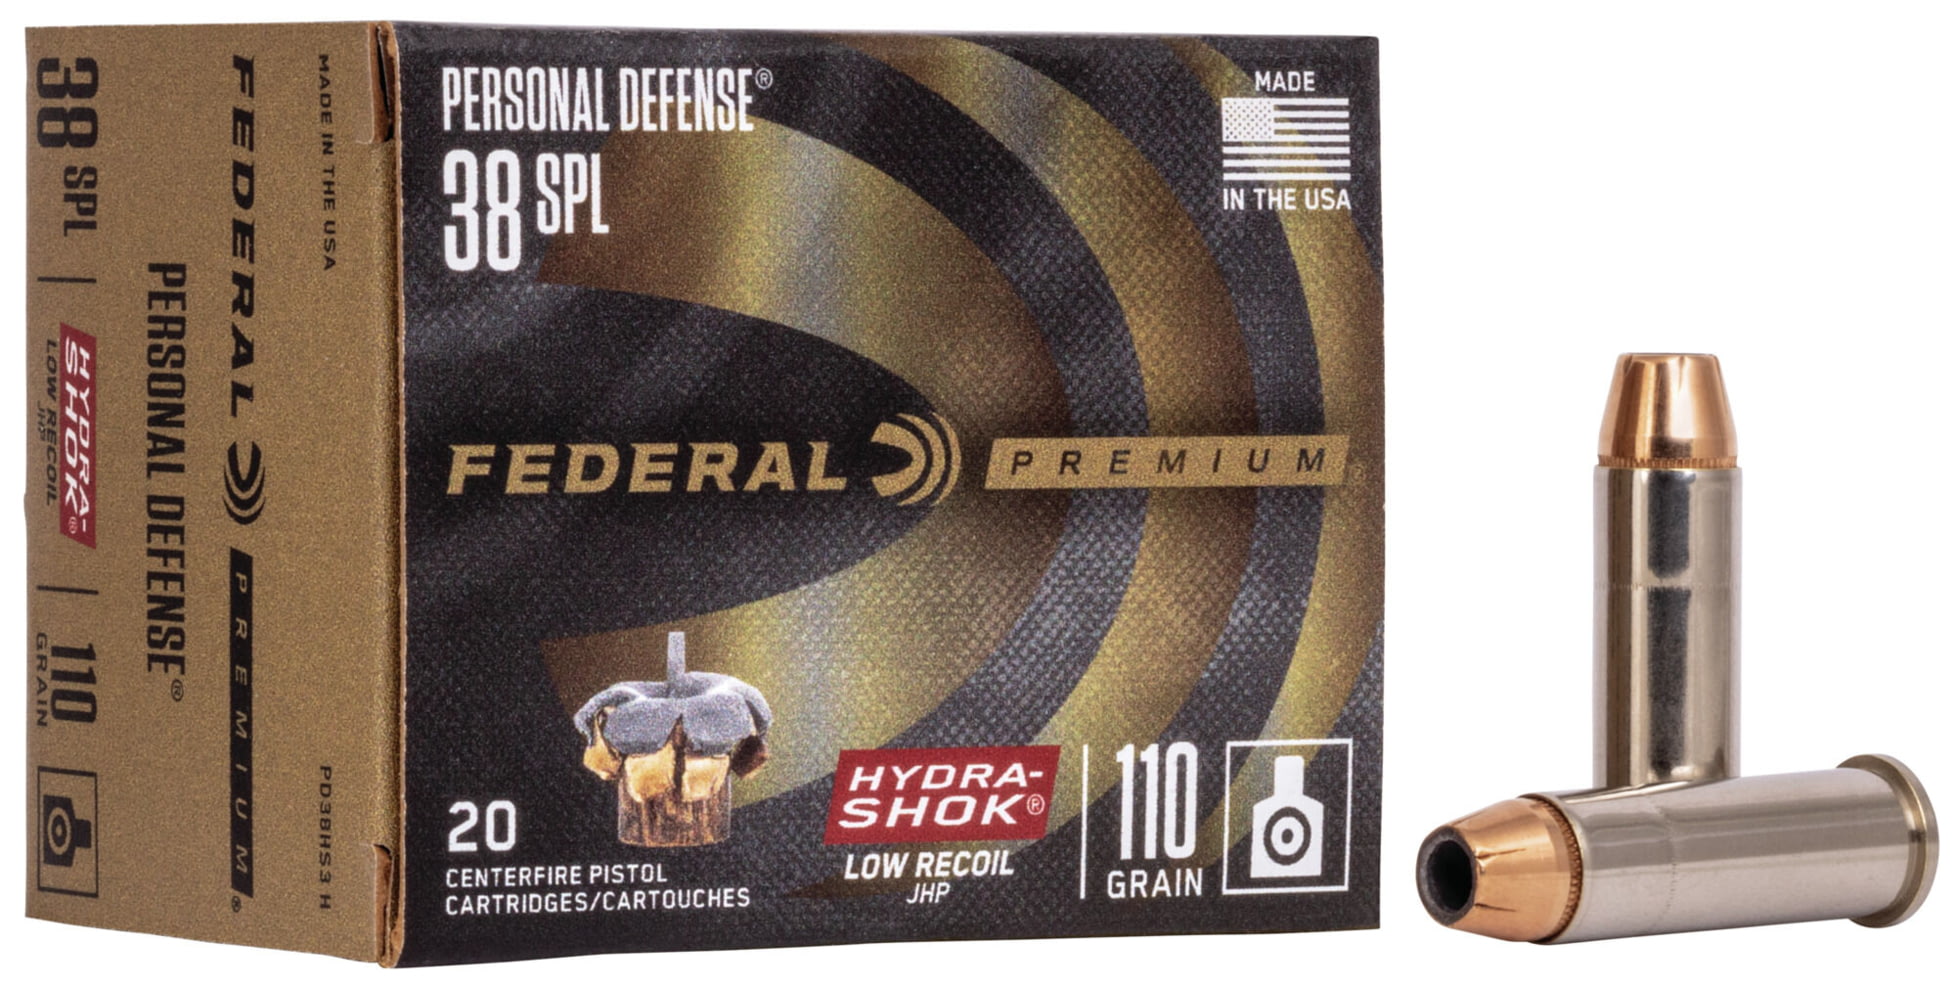 Federal Premium Centerfire Handgun Ammunition .38 Special 110 grain Hydra-Shok Jacketed Hollow Point Centerfire Pistol Ammunition